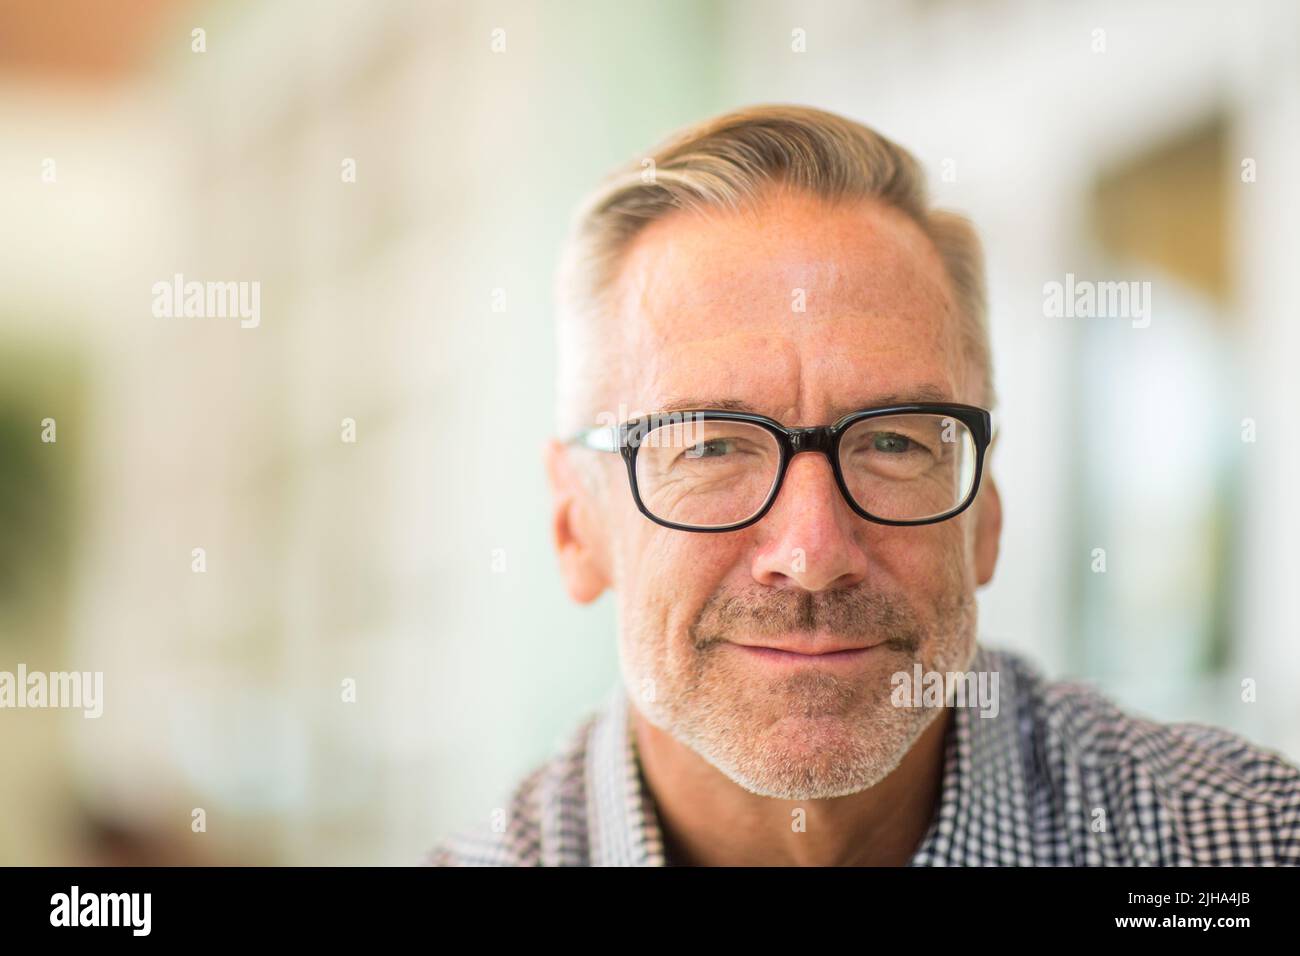 Mature handome fit man wearing glasses outside Stock Photo